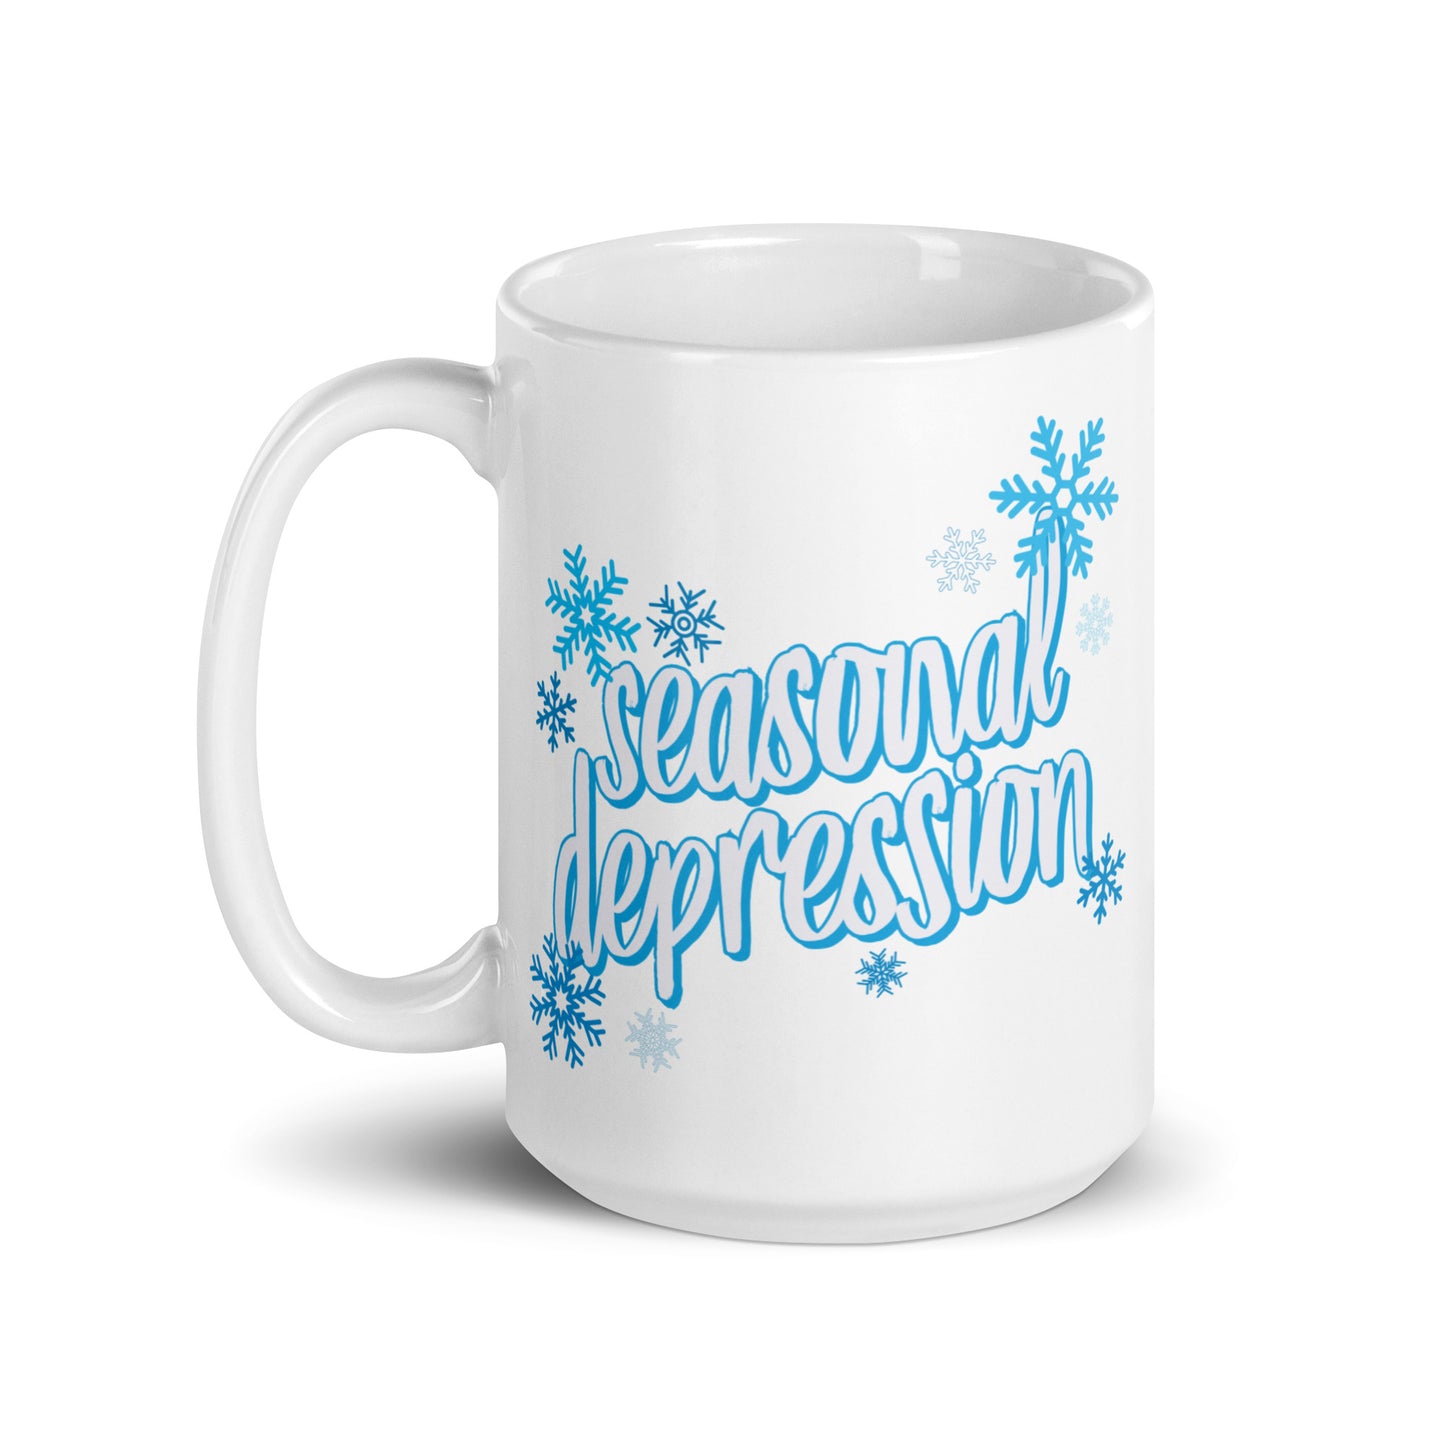 Seasonal Depression mug